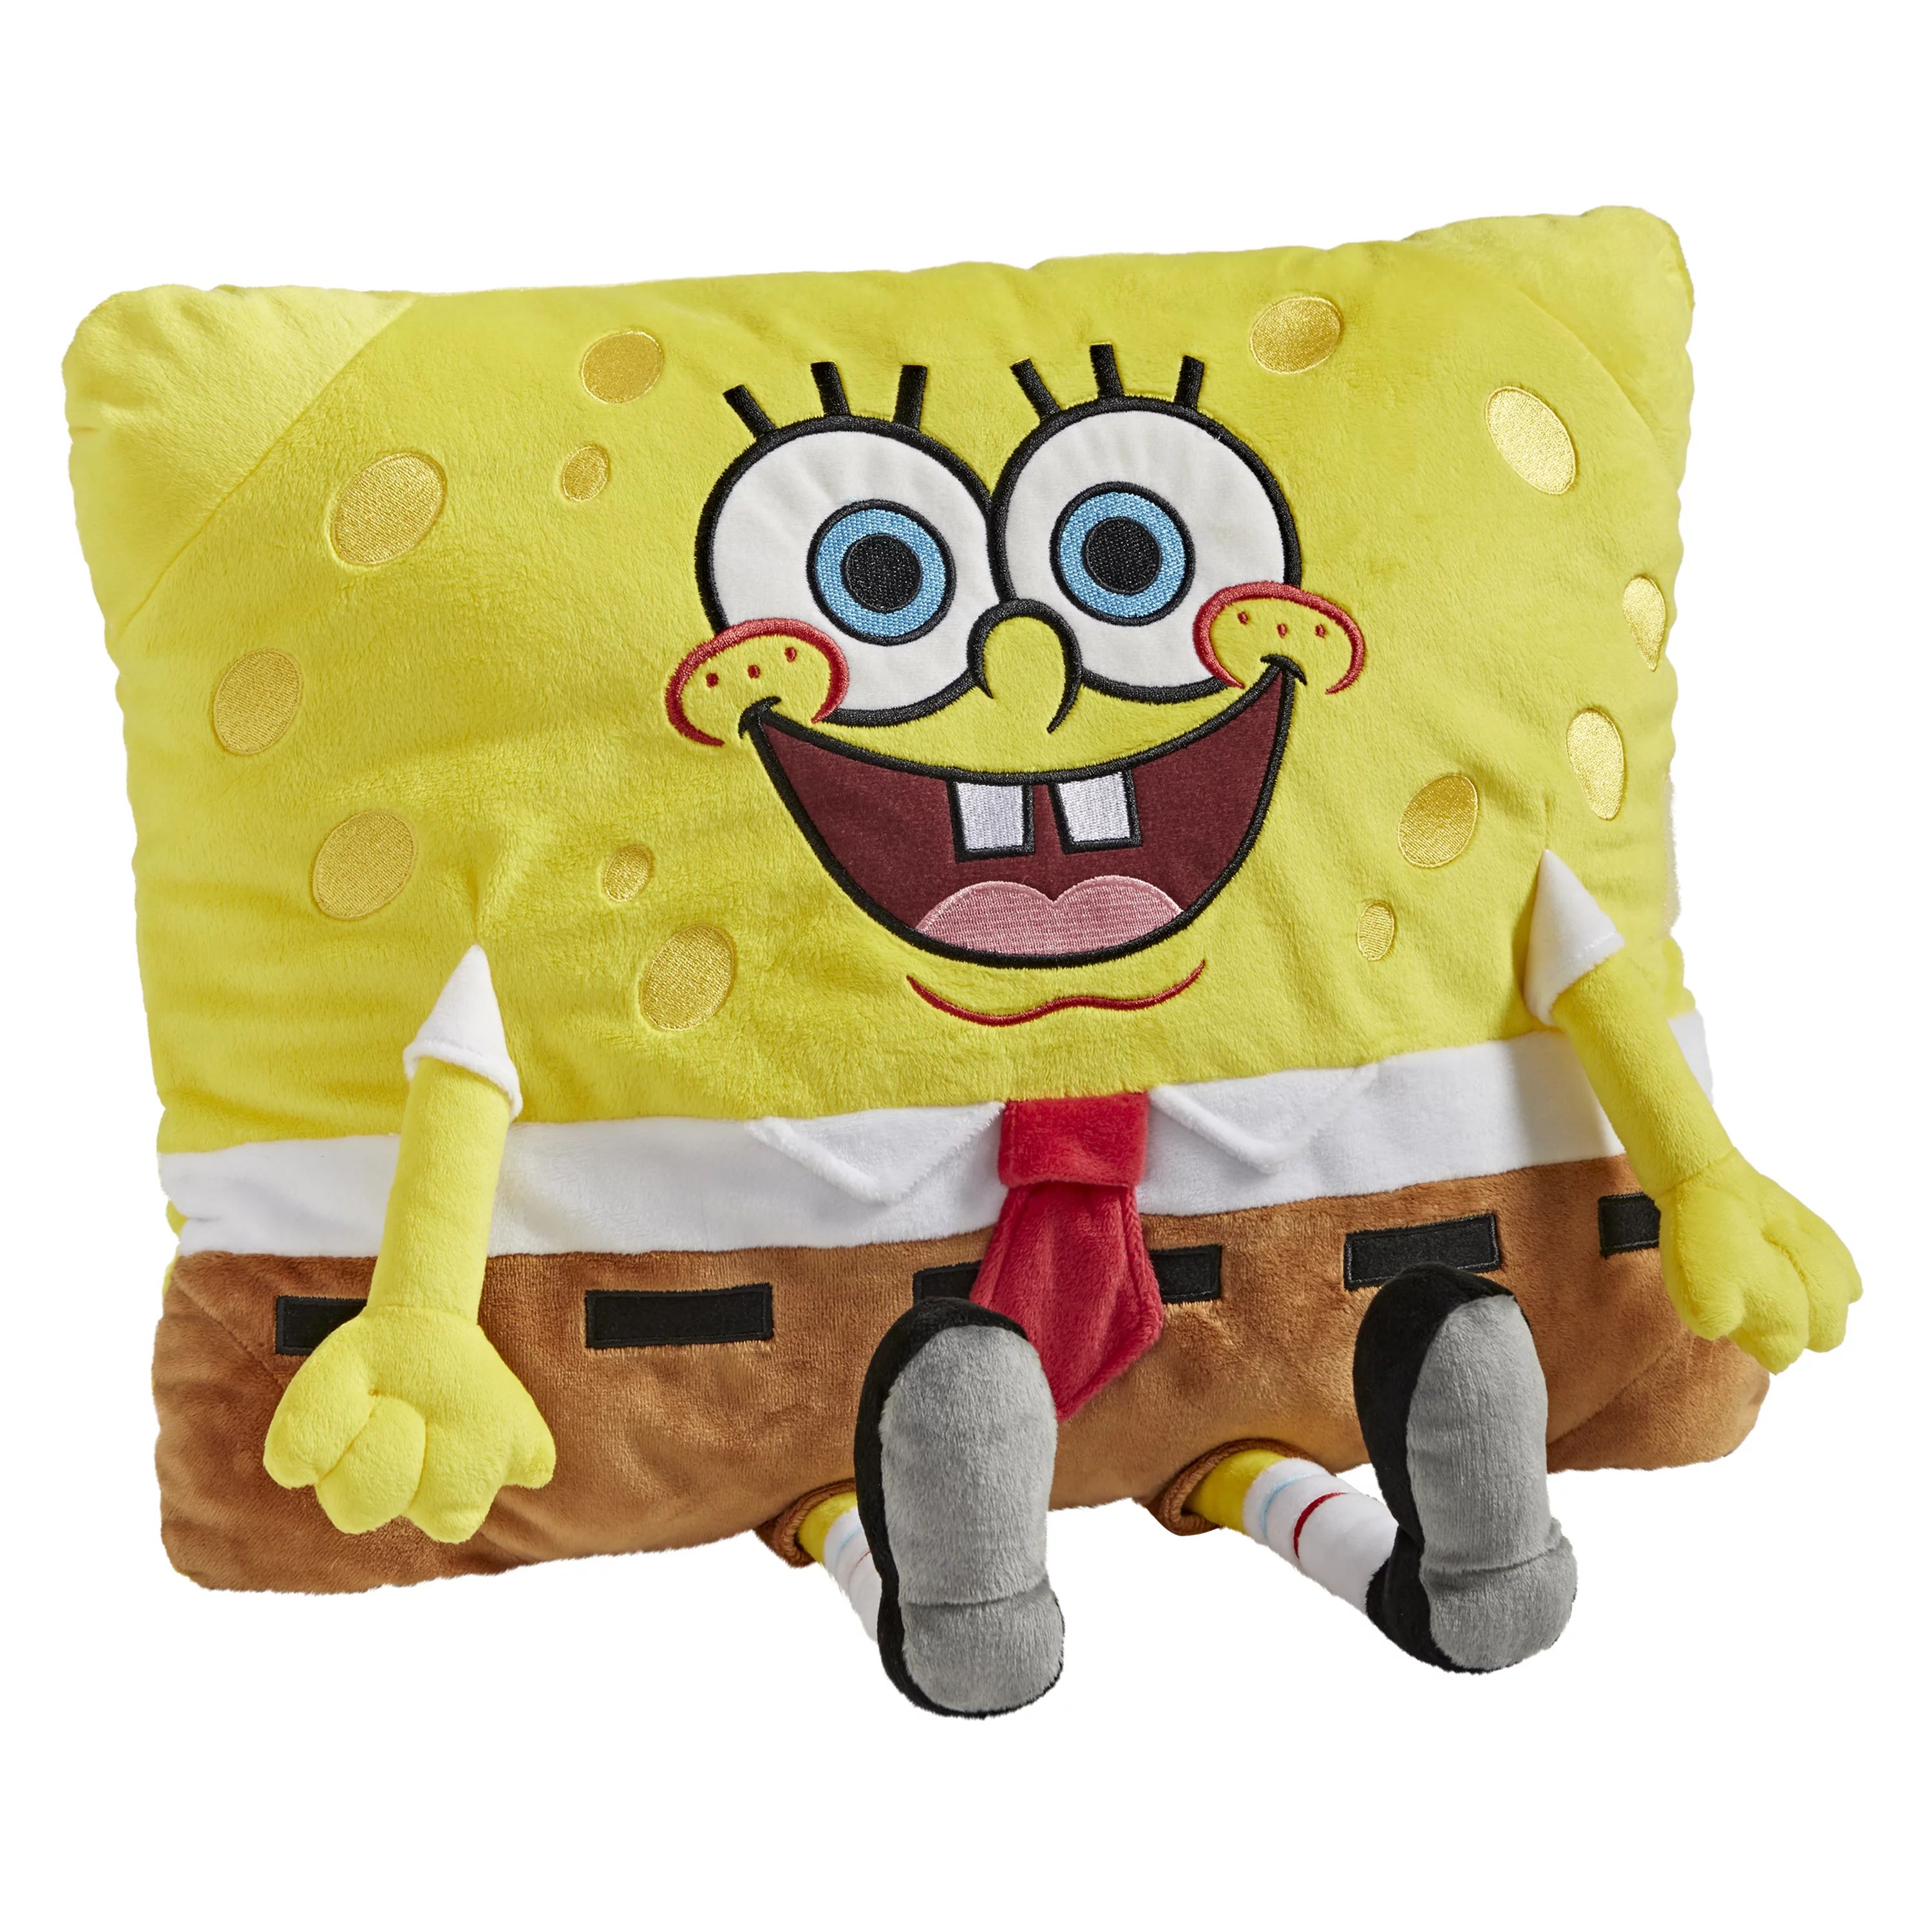 Pillow Pets Nickelodeon SpongeBob SquarePants Stuffed Animal Toy | Walmart (US)